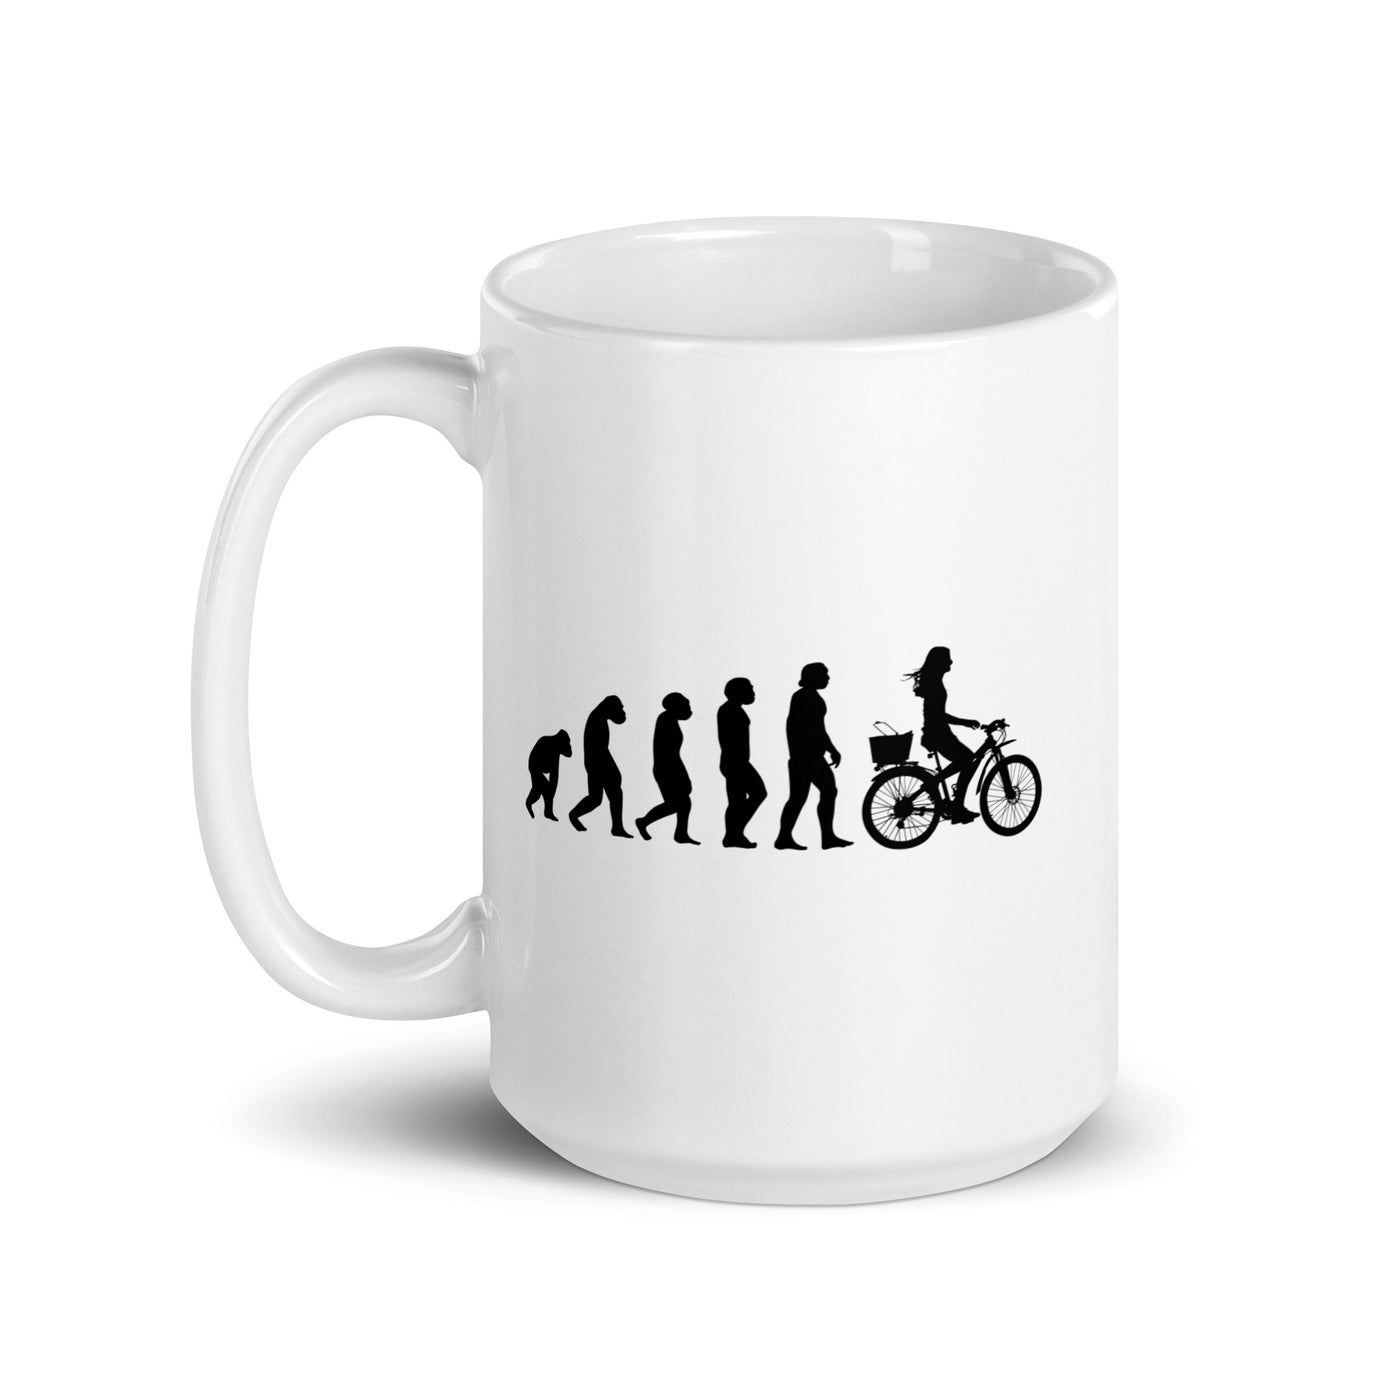 Evolution And Cycling - Tasse fahrrad